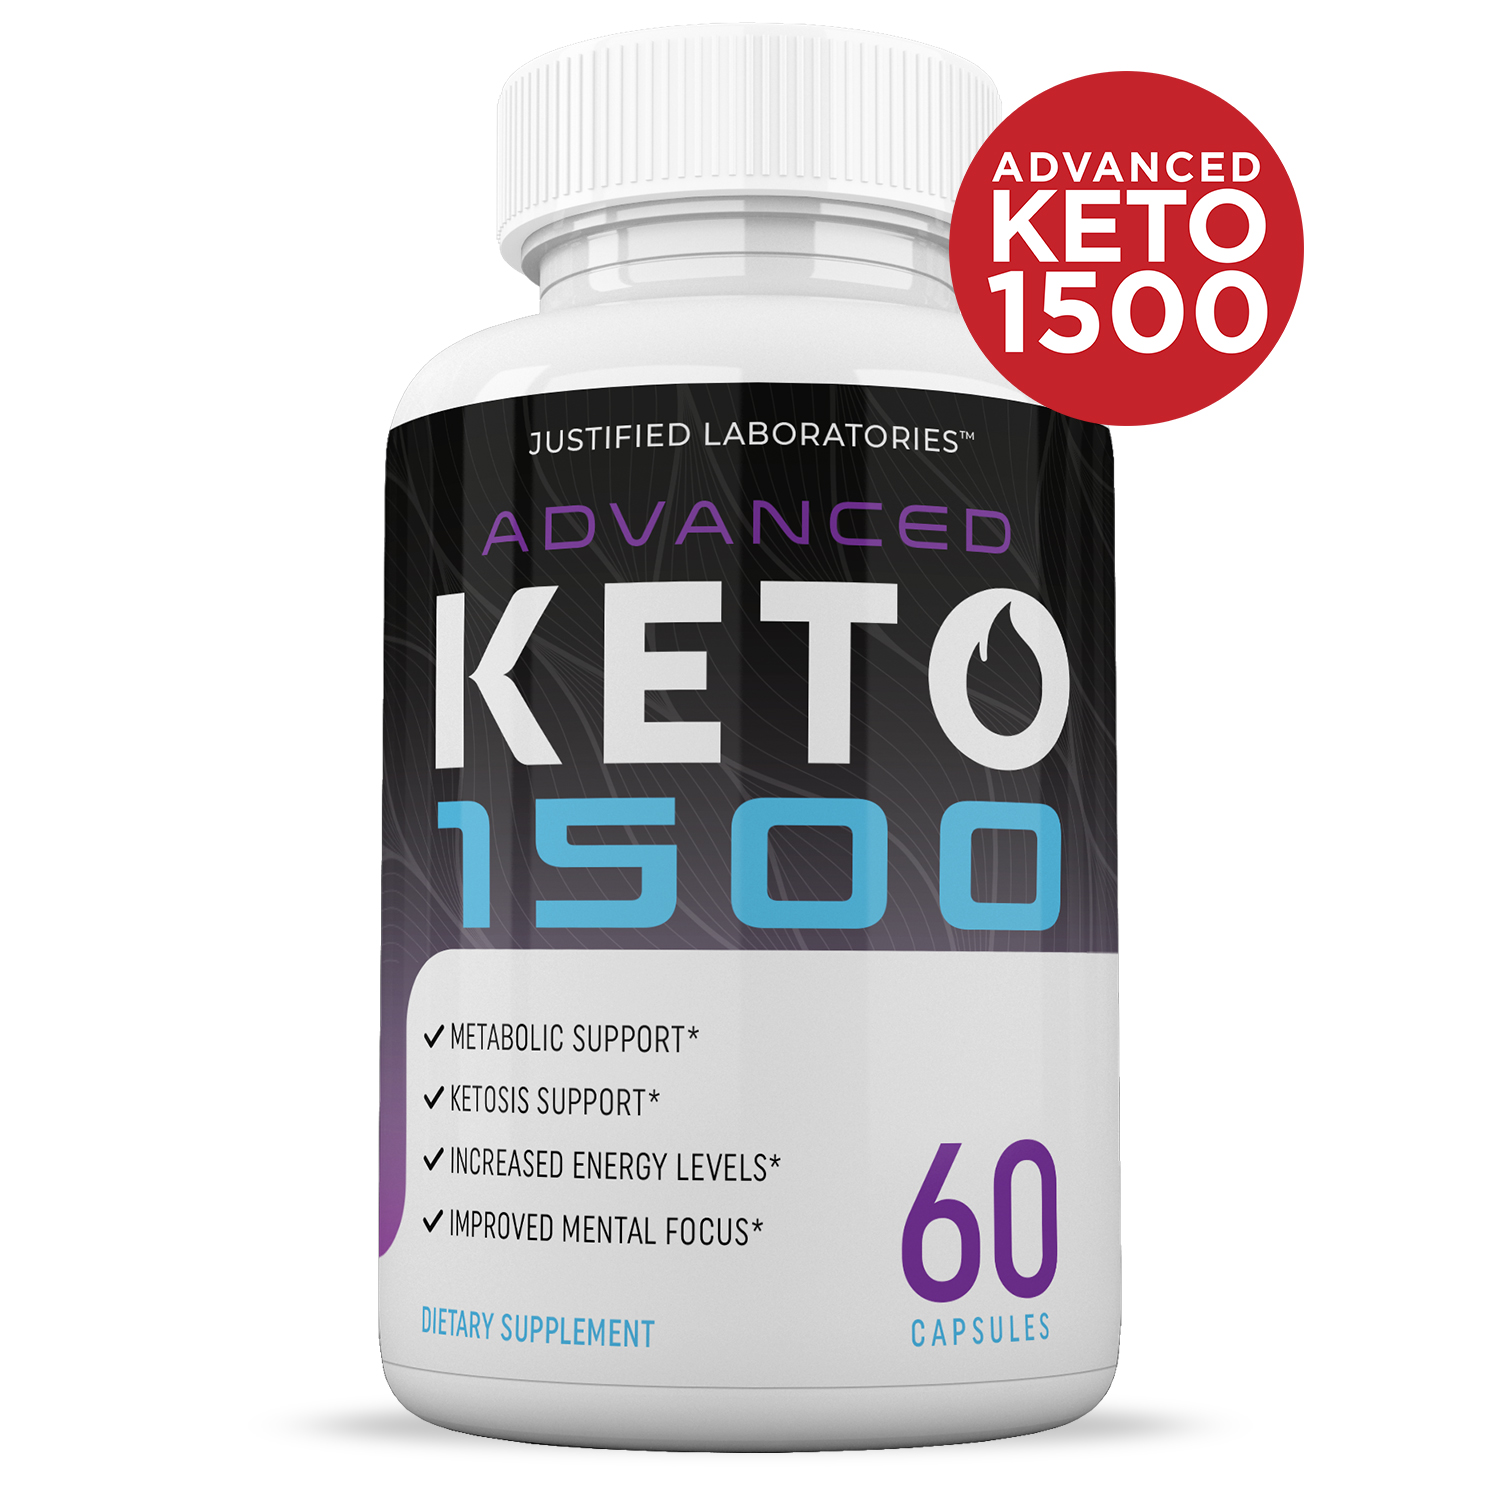 Advanced Keto 1500 Pills Includes Apple Cider Vinegar goBHB Exogenous Ketones Advanced Ketogenic Supplement Ketosis Support for Men Women 60 Capsule - image 2 of 5